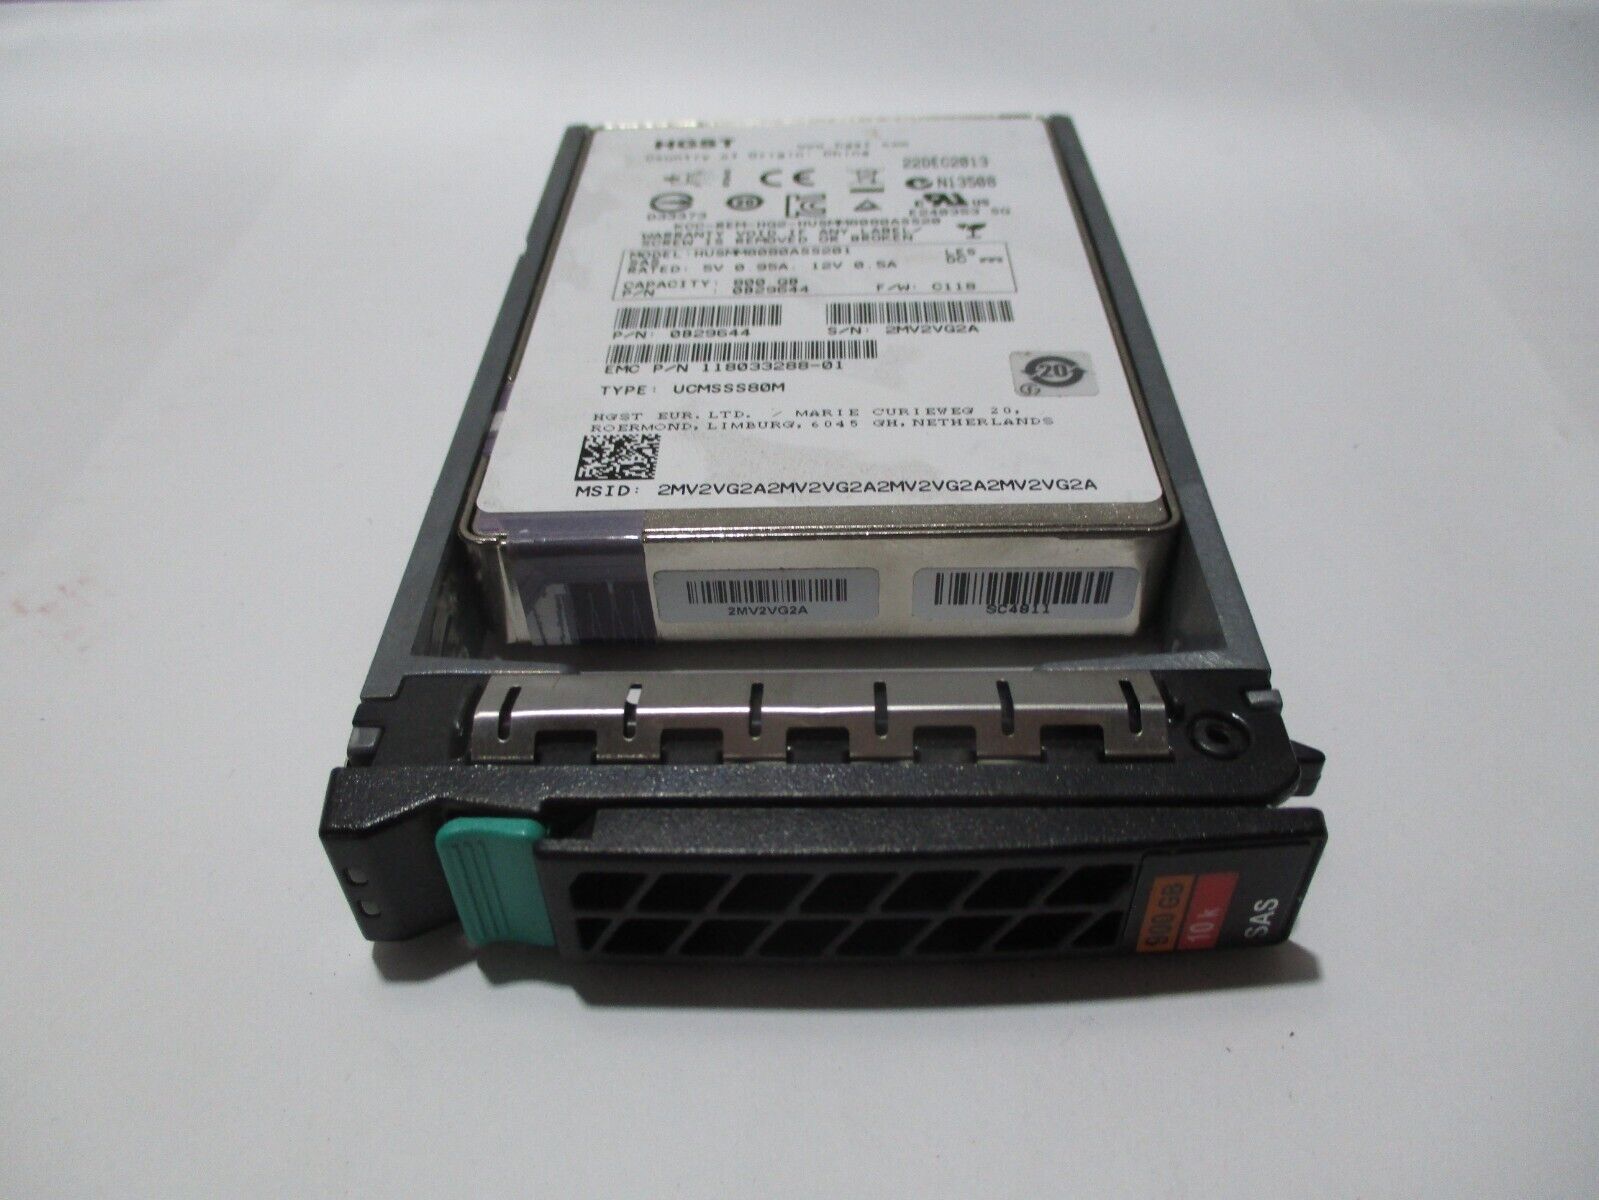 EMC HGST 800GB SAS SSD Flash Drive 118033288-01 HUSMM8080ASS201 w/ caddy